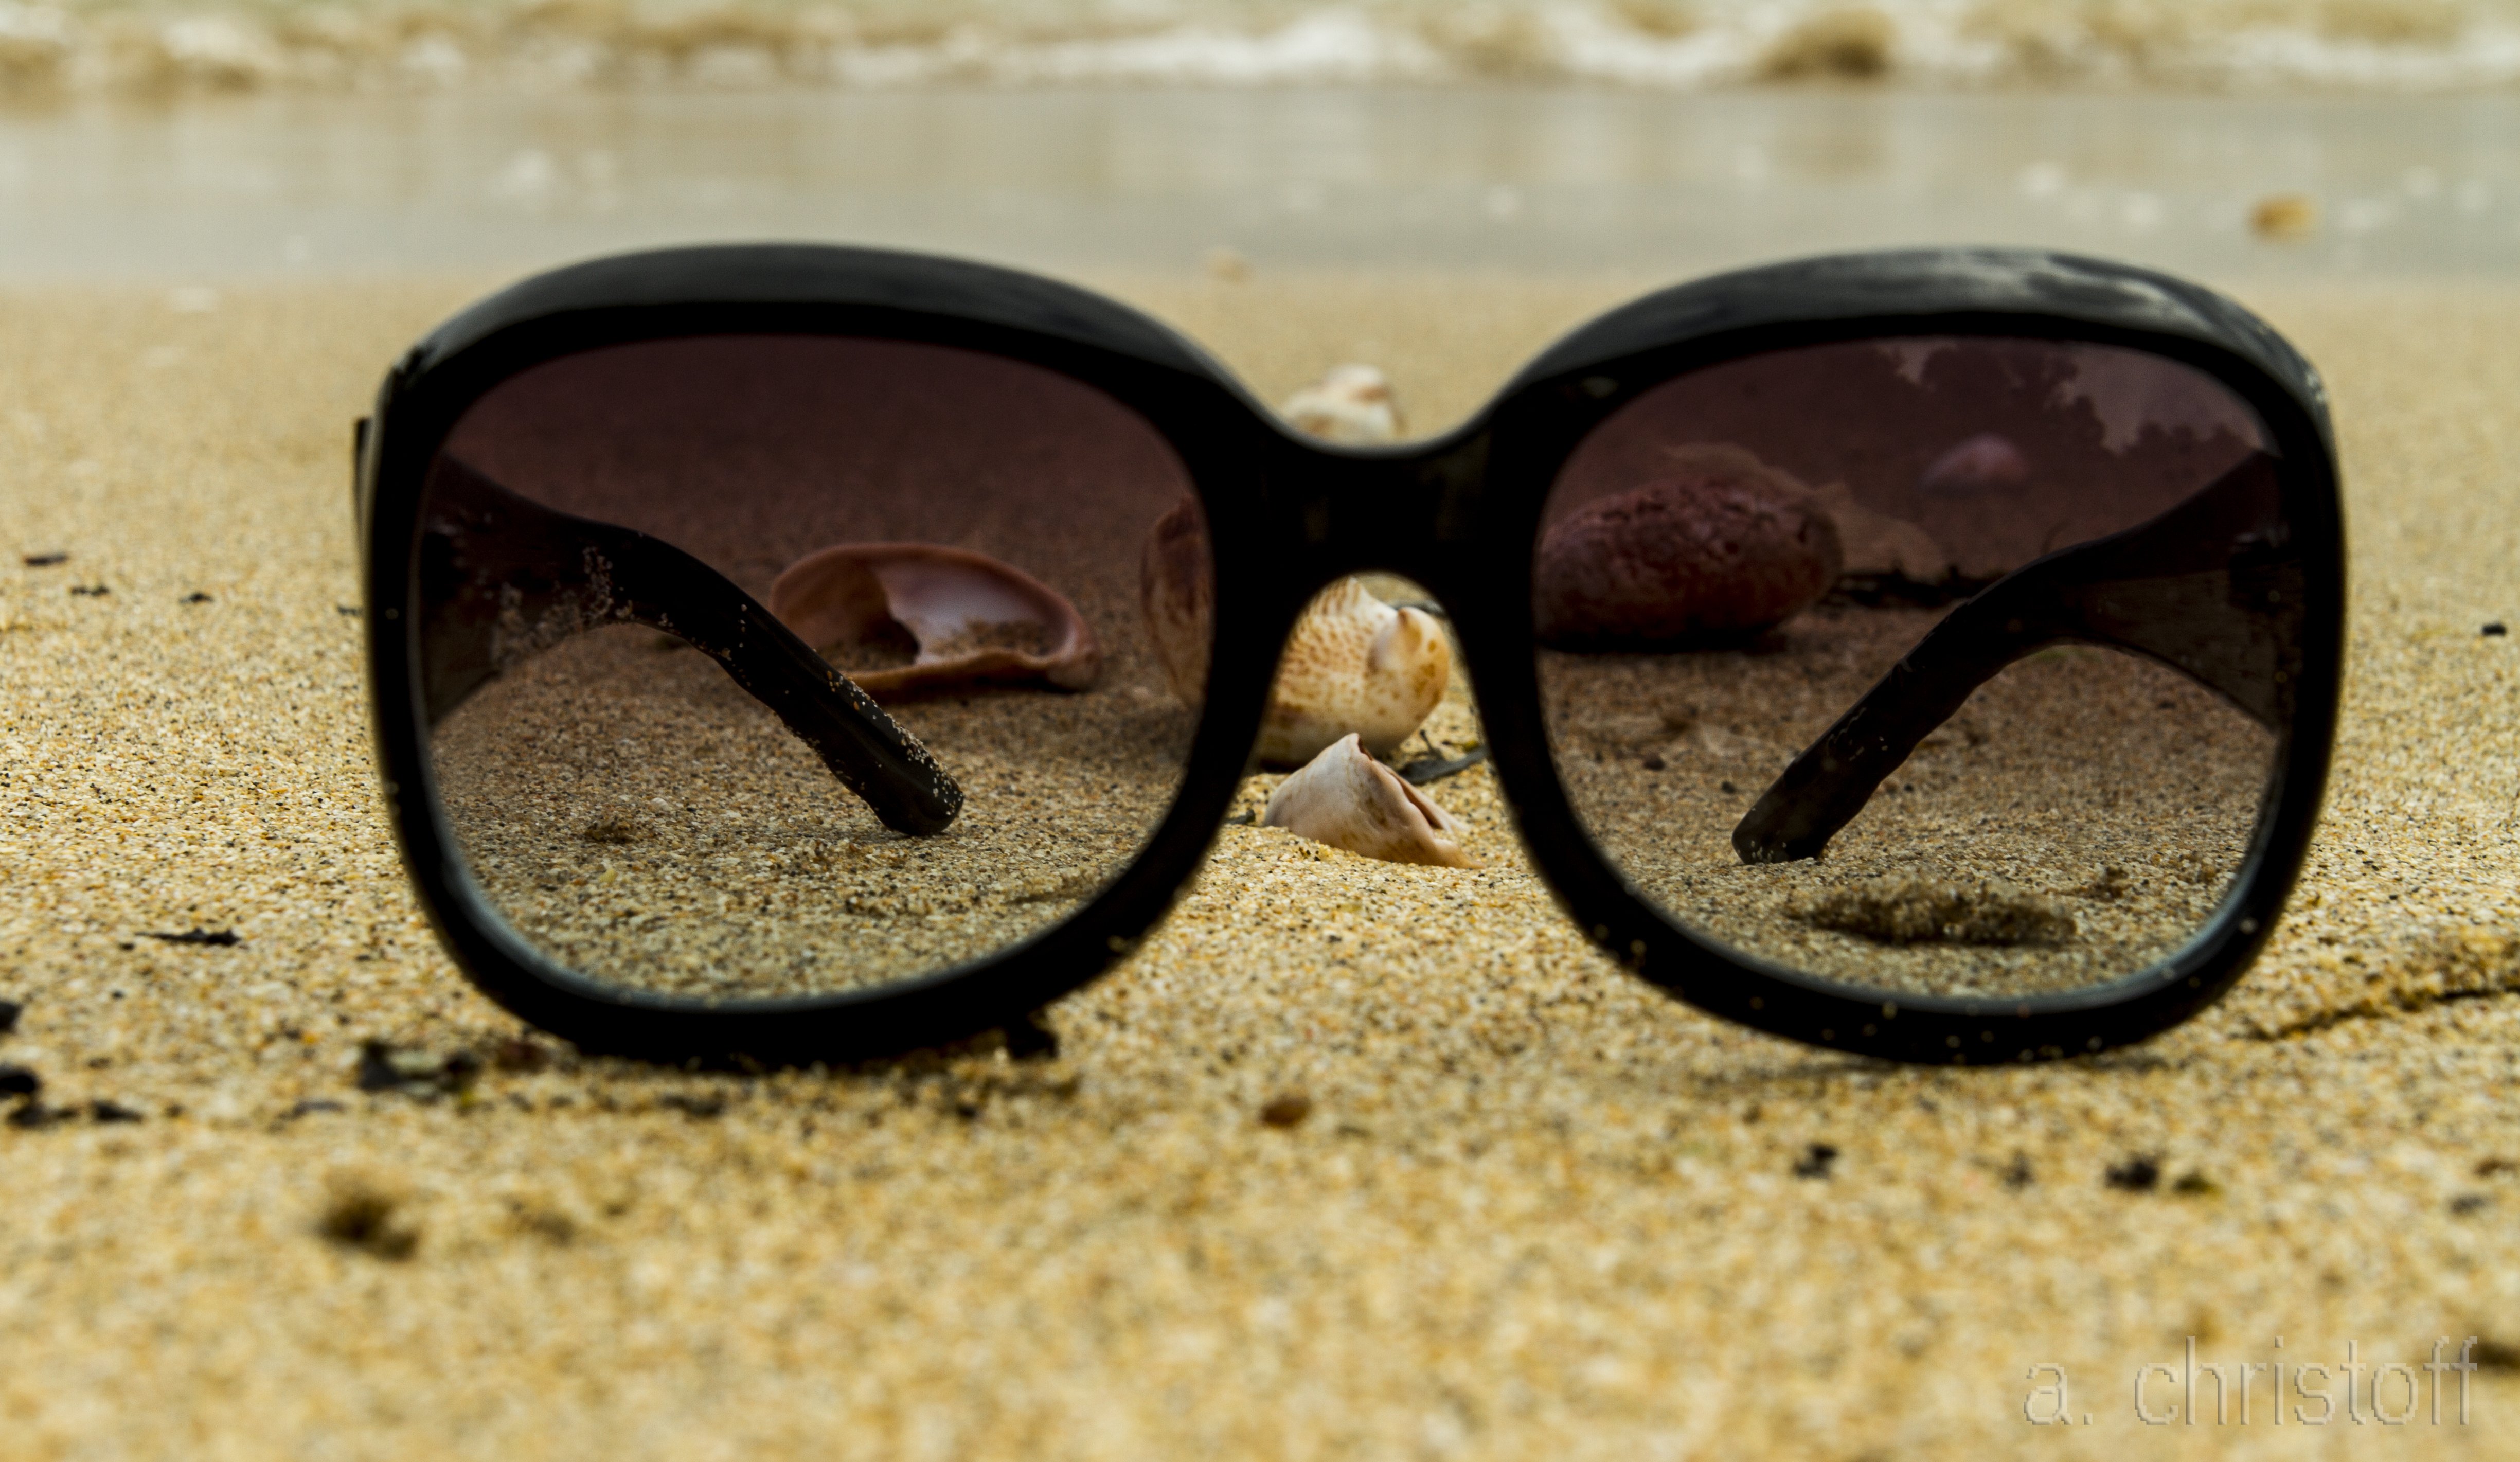 Лето на носу. Солнечные очки. Солнечные очки на песке. Пляжные очки. Пляжные солнечные очки.